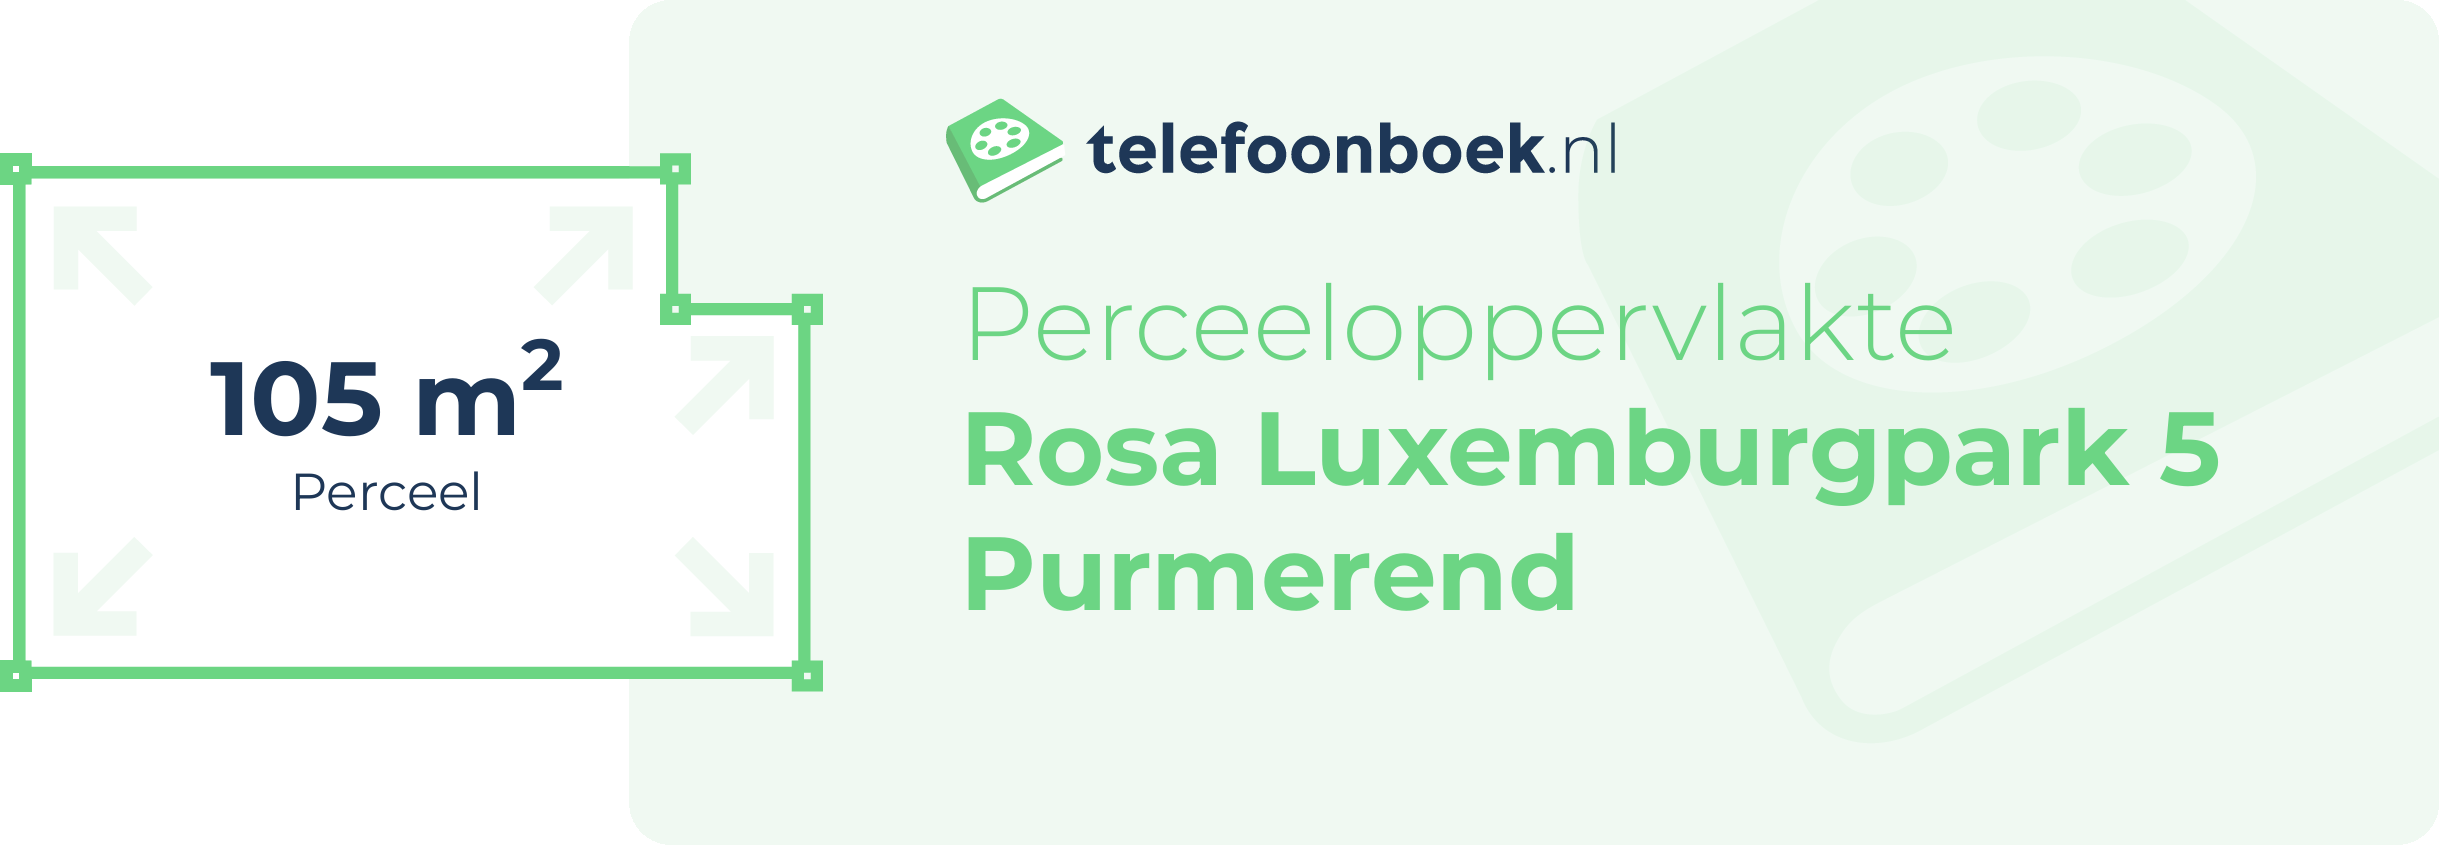 Perceeloppervlakte Rosa Luxemburgpark 5 Purmerend